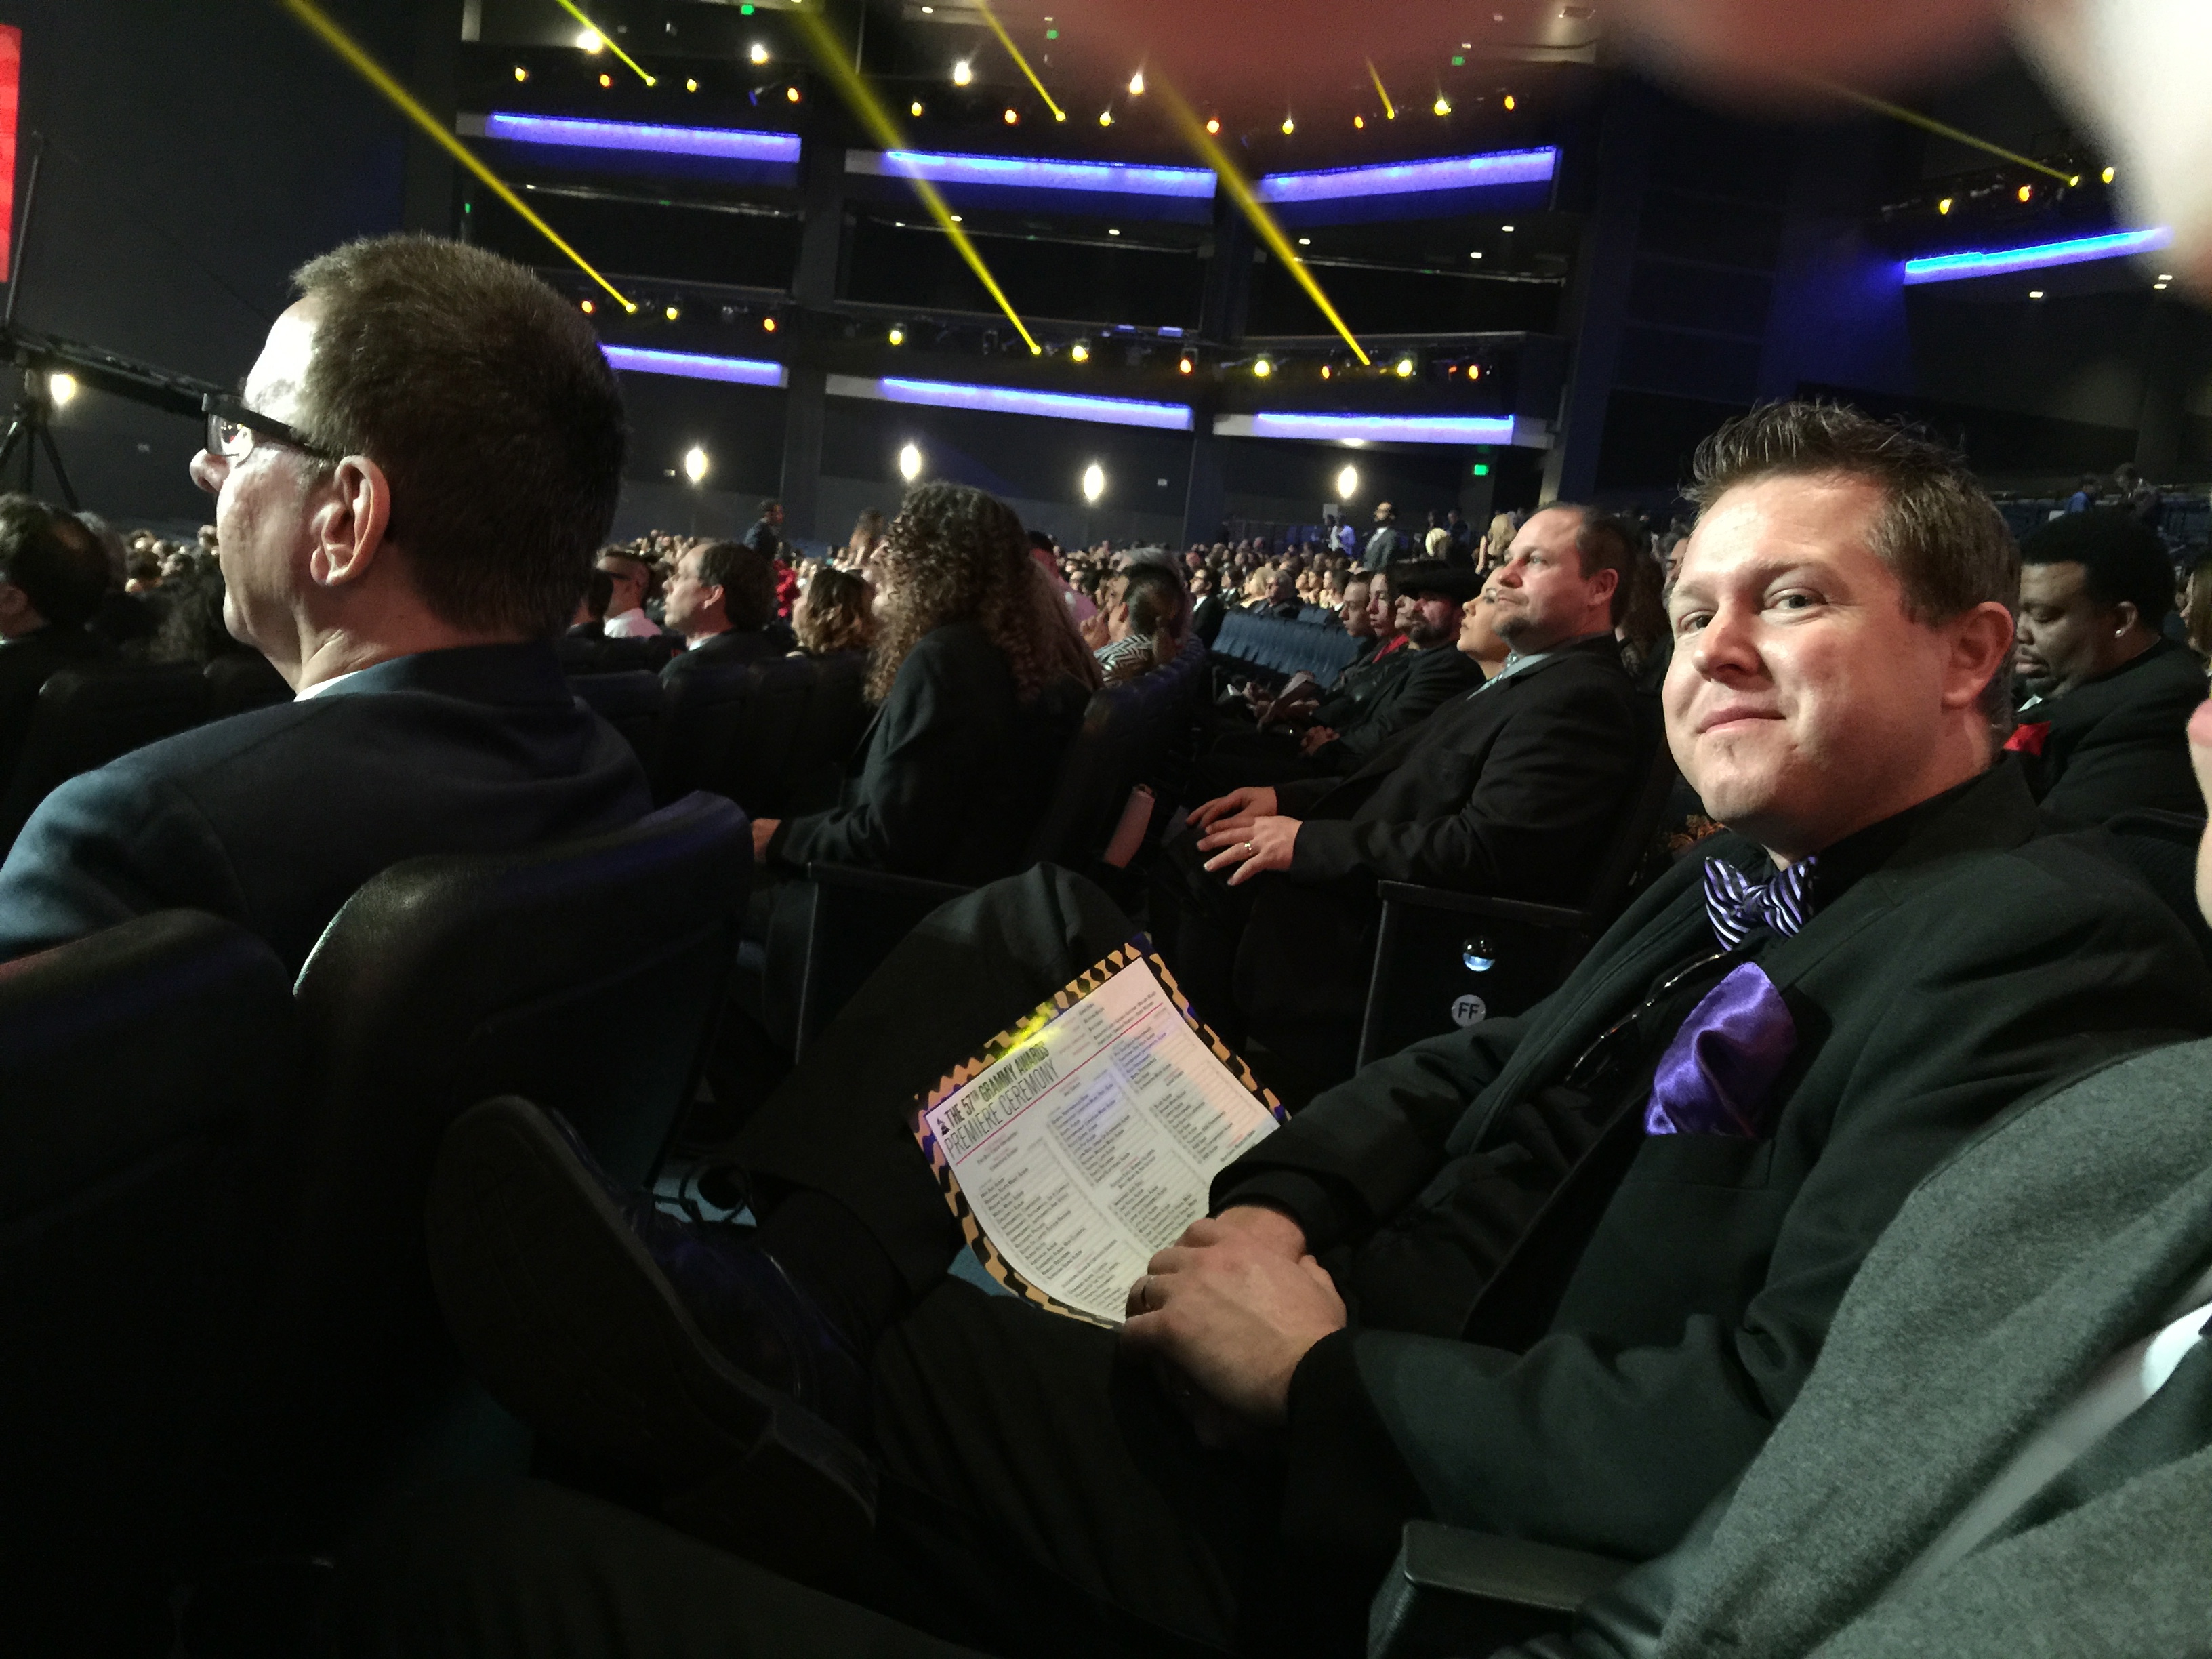 Photo of Jeffrey Dokken with Weird Al Yankovitch across the aisle